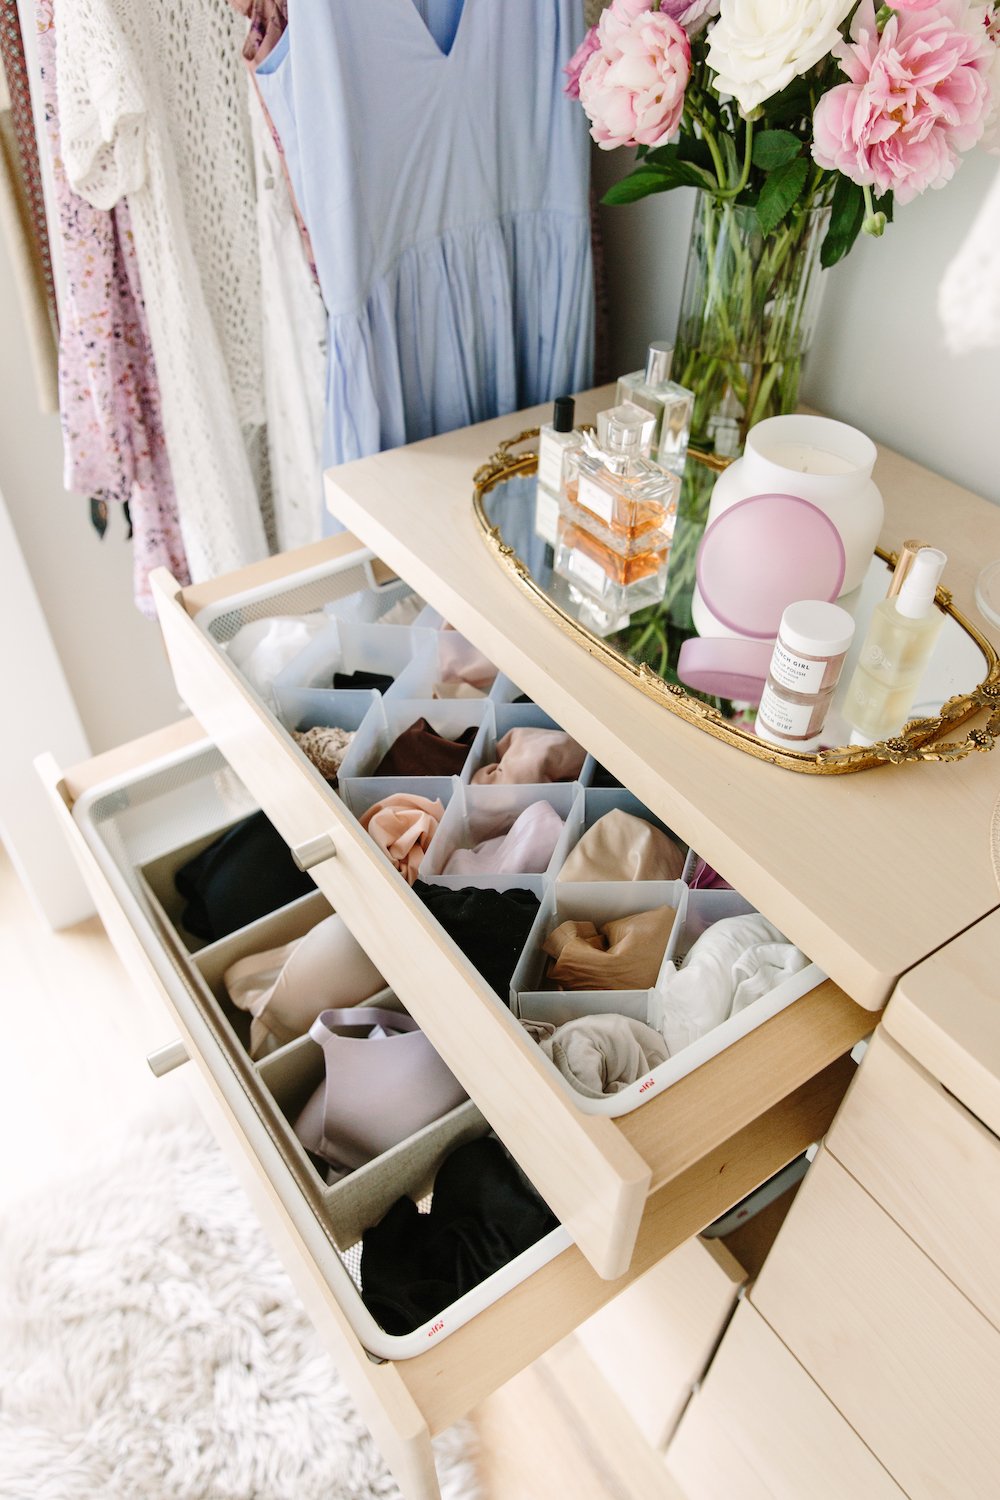 lingerie drawer goals, such good closet organization